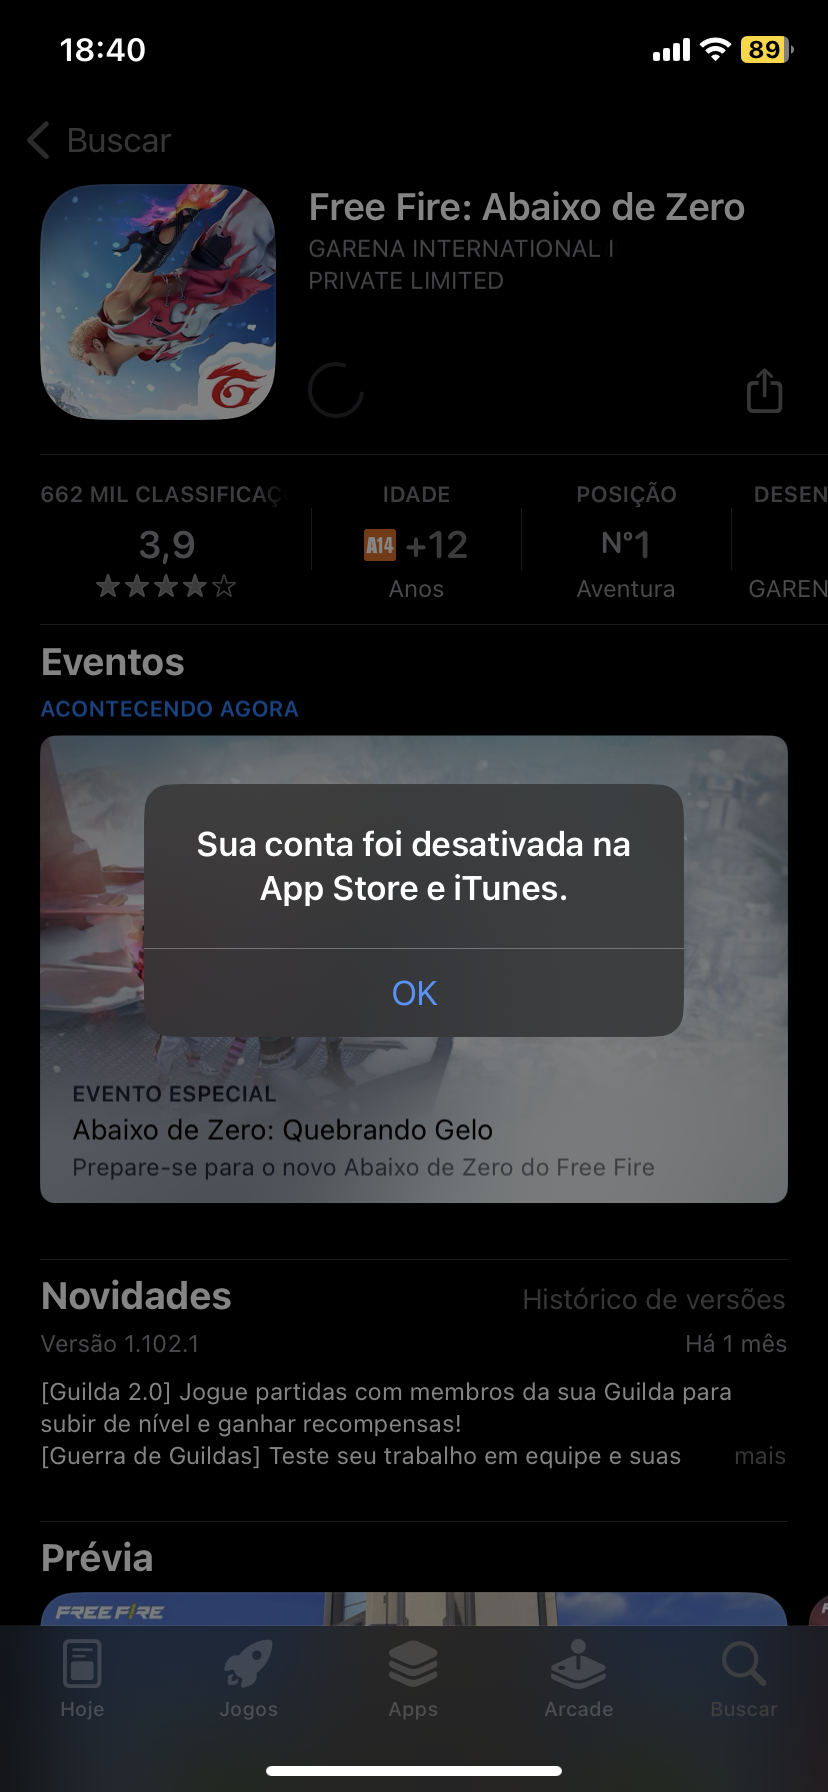 Free Fire: Abaixo de Zero na App Store